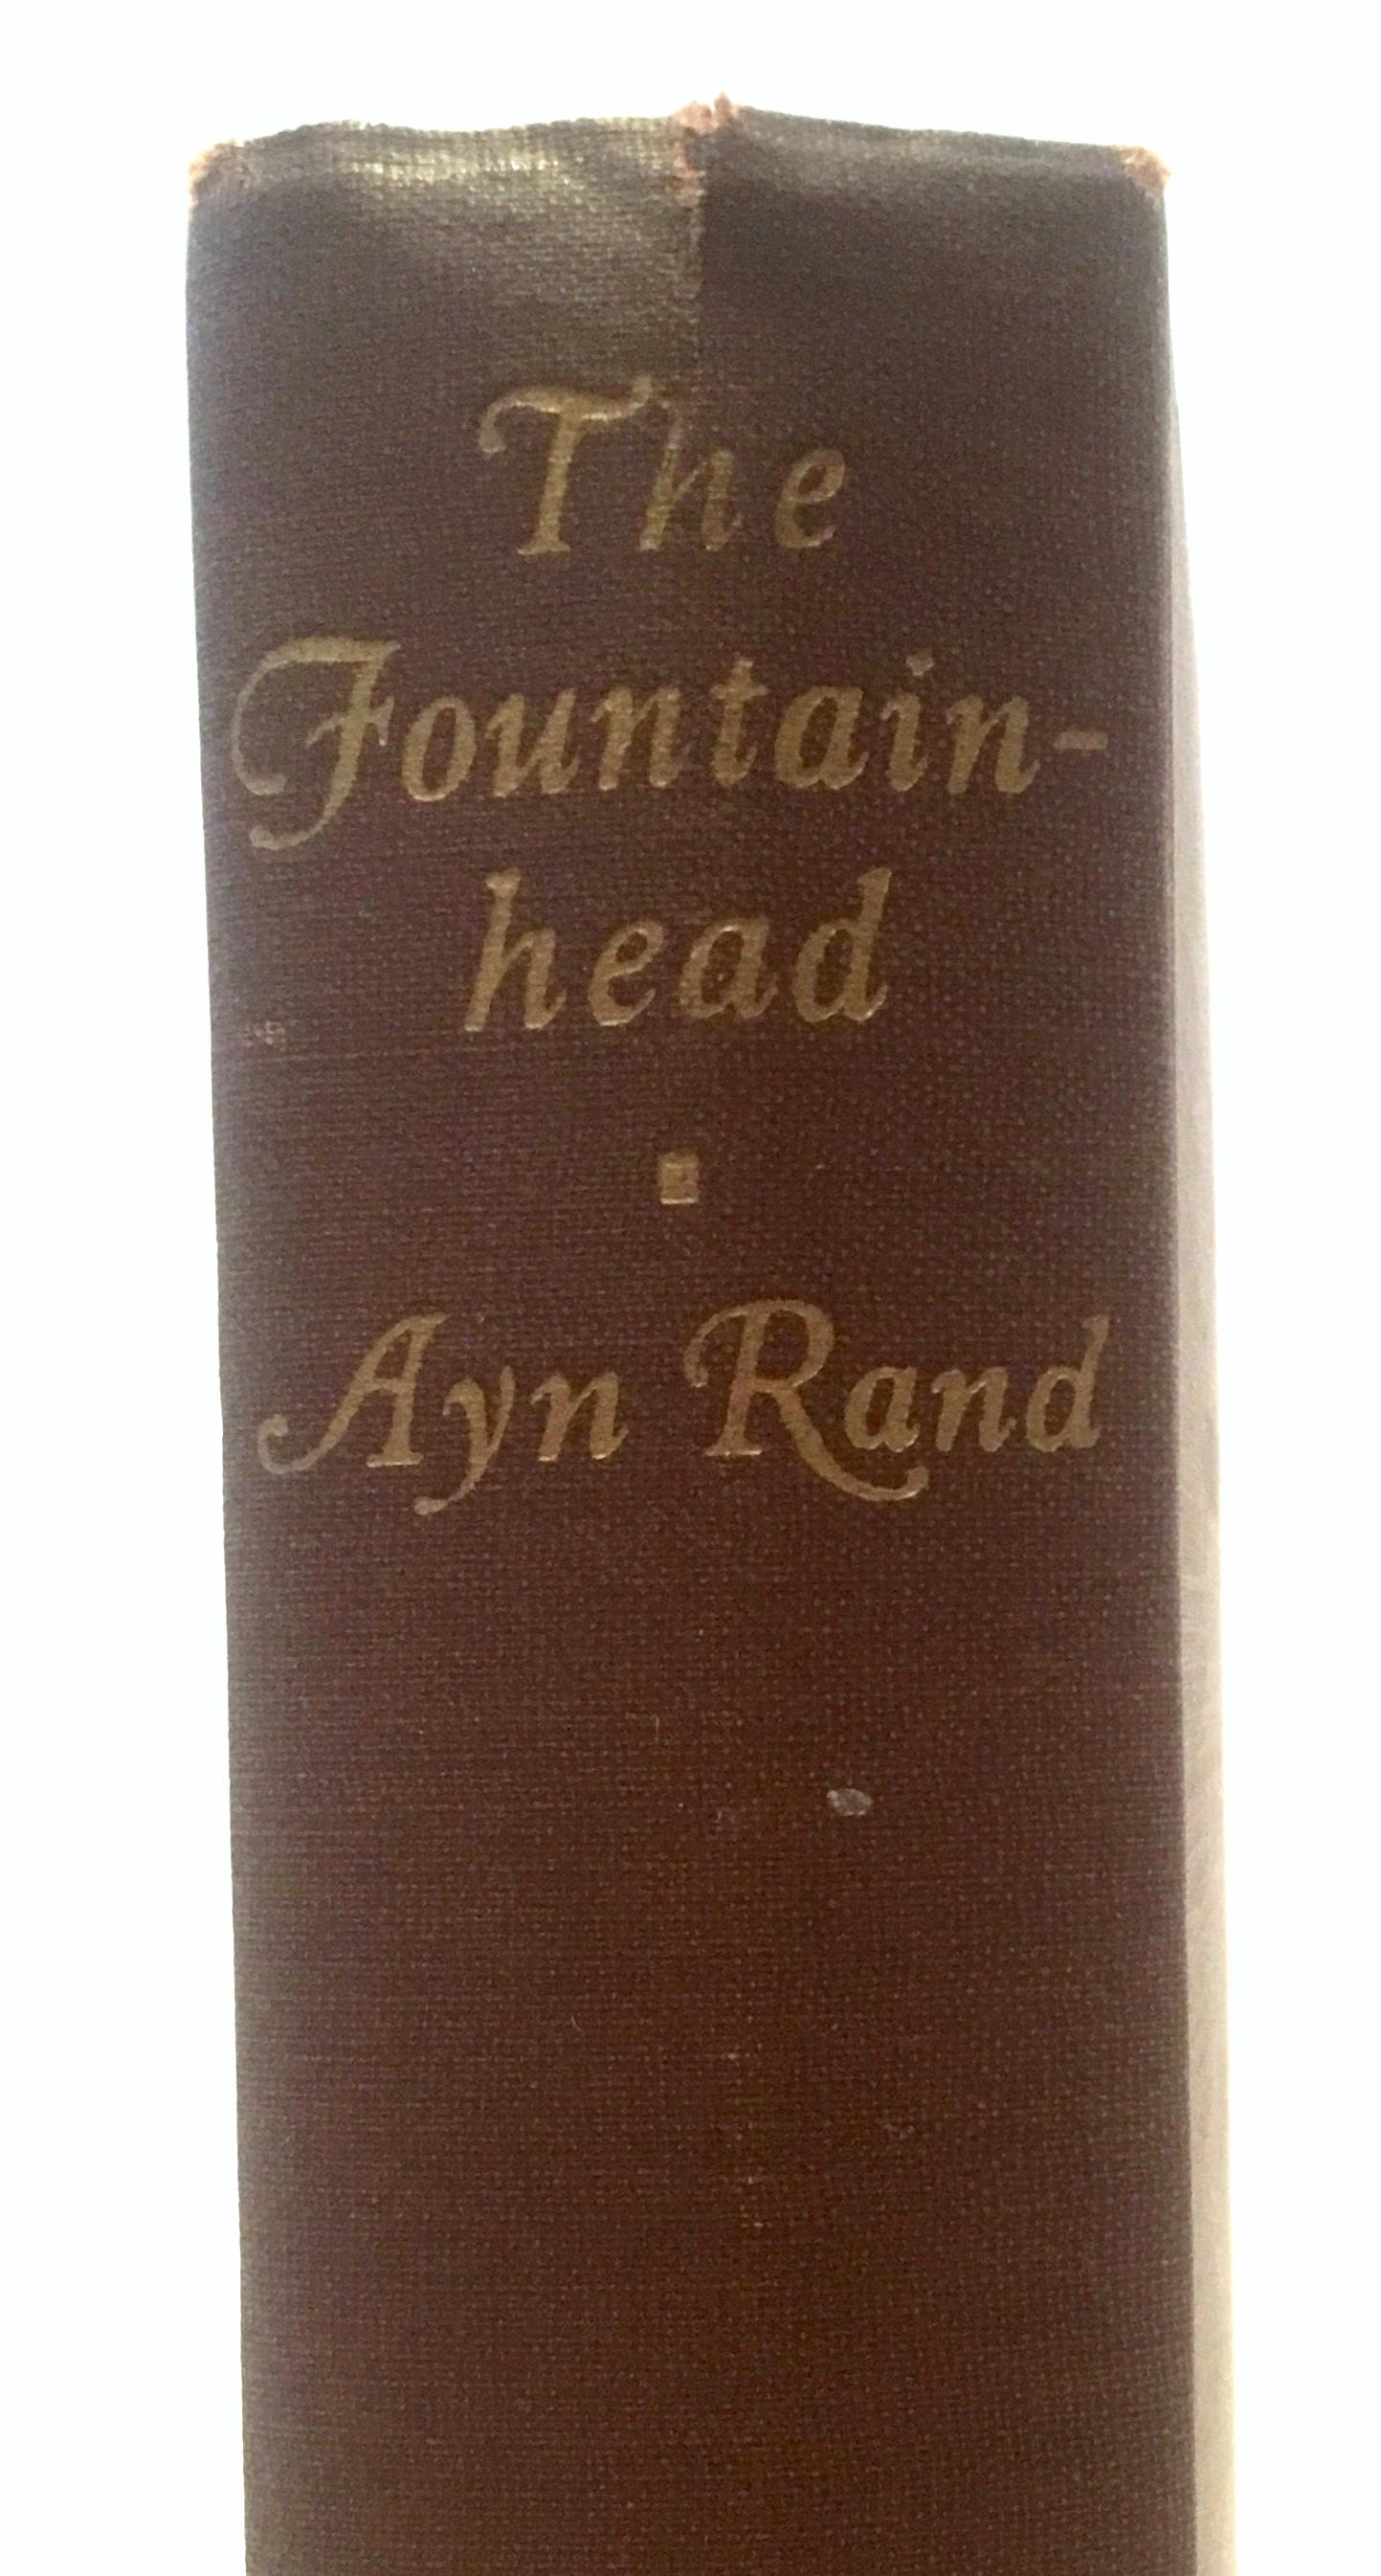 Fabric 1st Edition The Fountainhead Book by, Ayn Rand', Blakiston Company Bobbs-Merrill